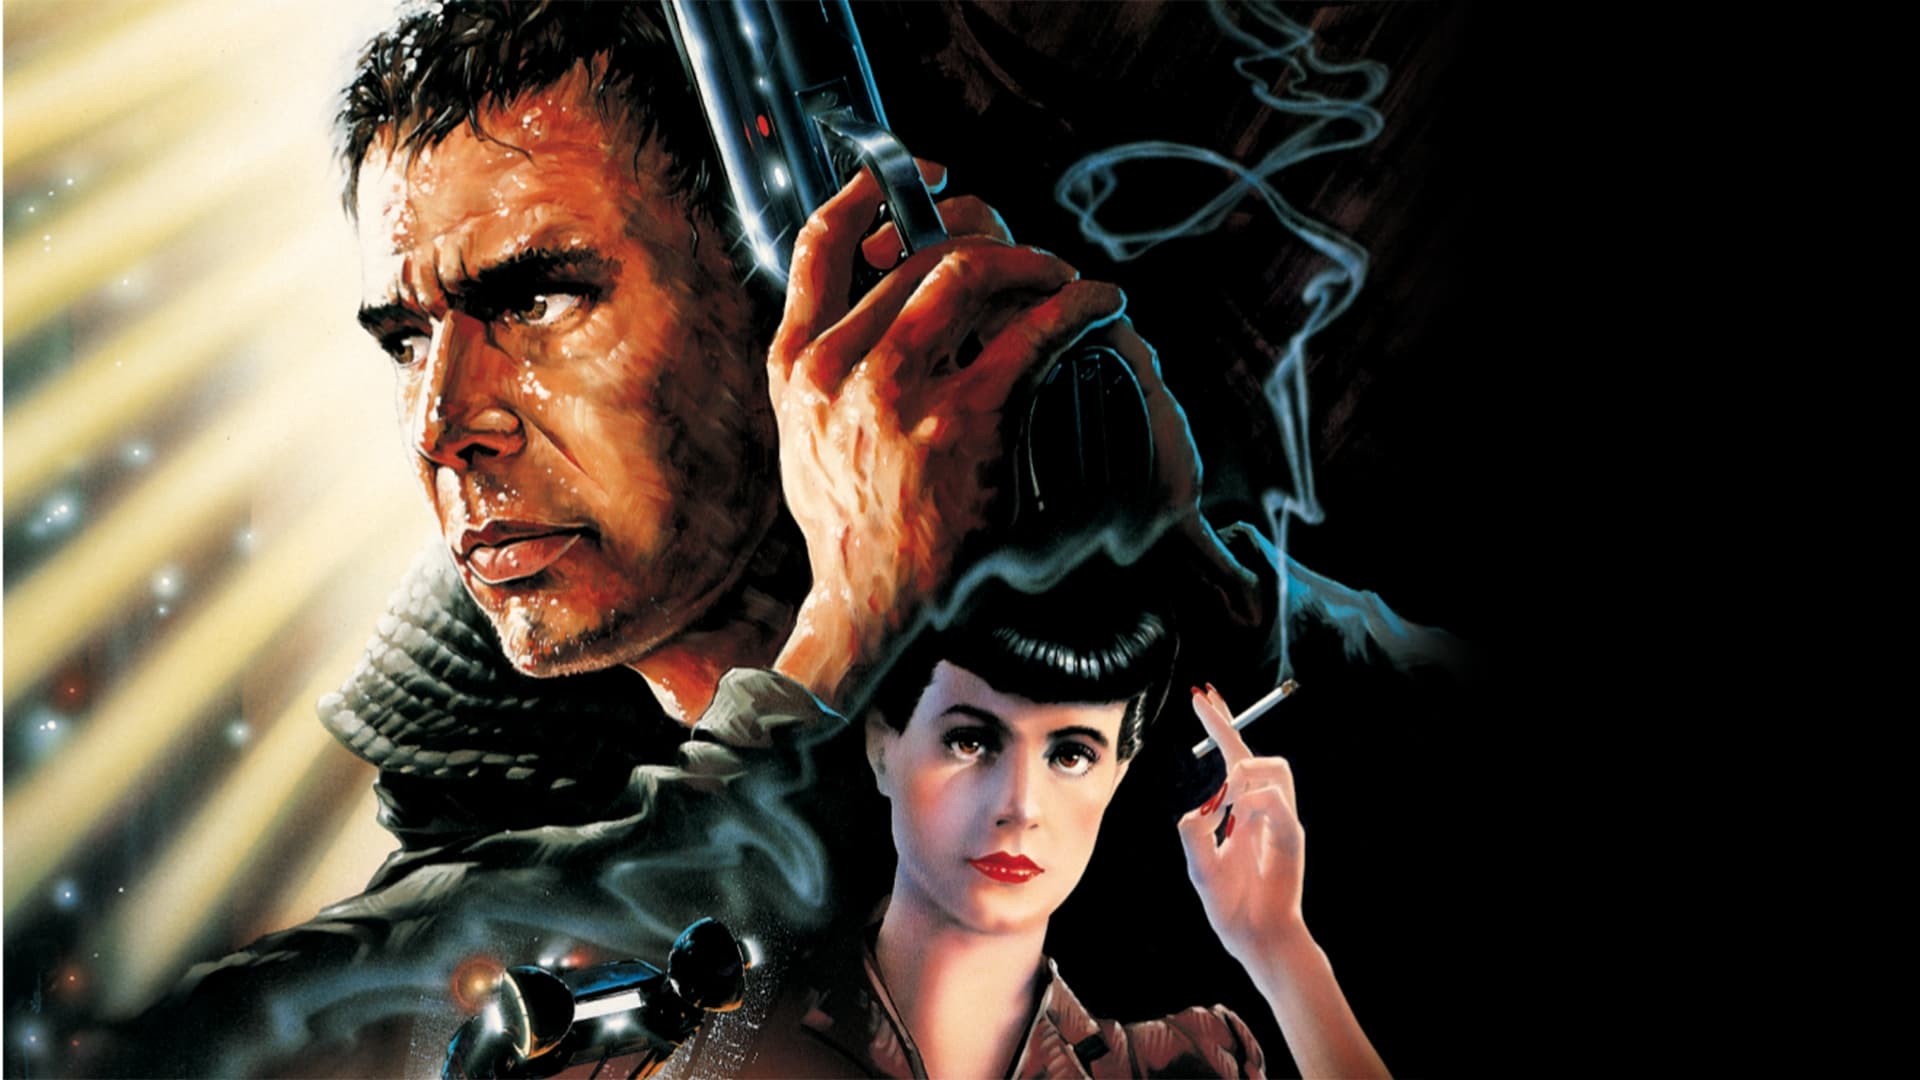 Image du film Blade Runner (Final Cut) mbo6ox0zxglz6megn2zddds7uktjpg